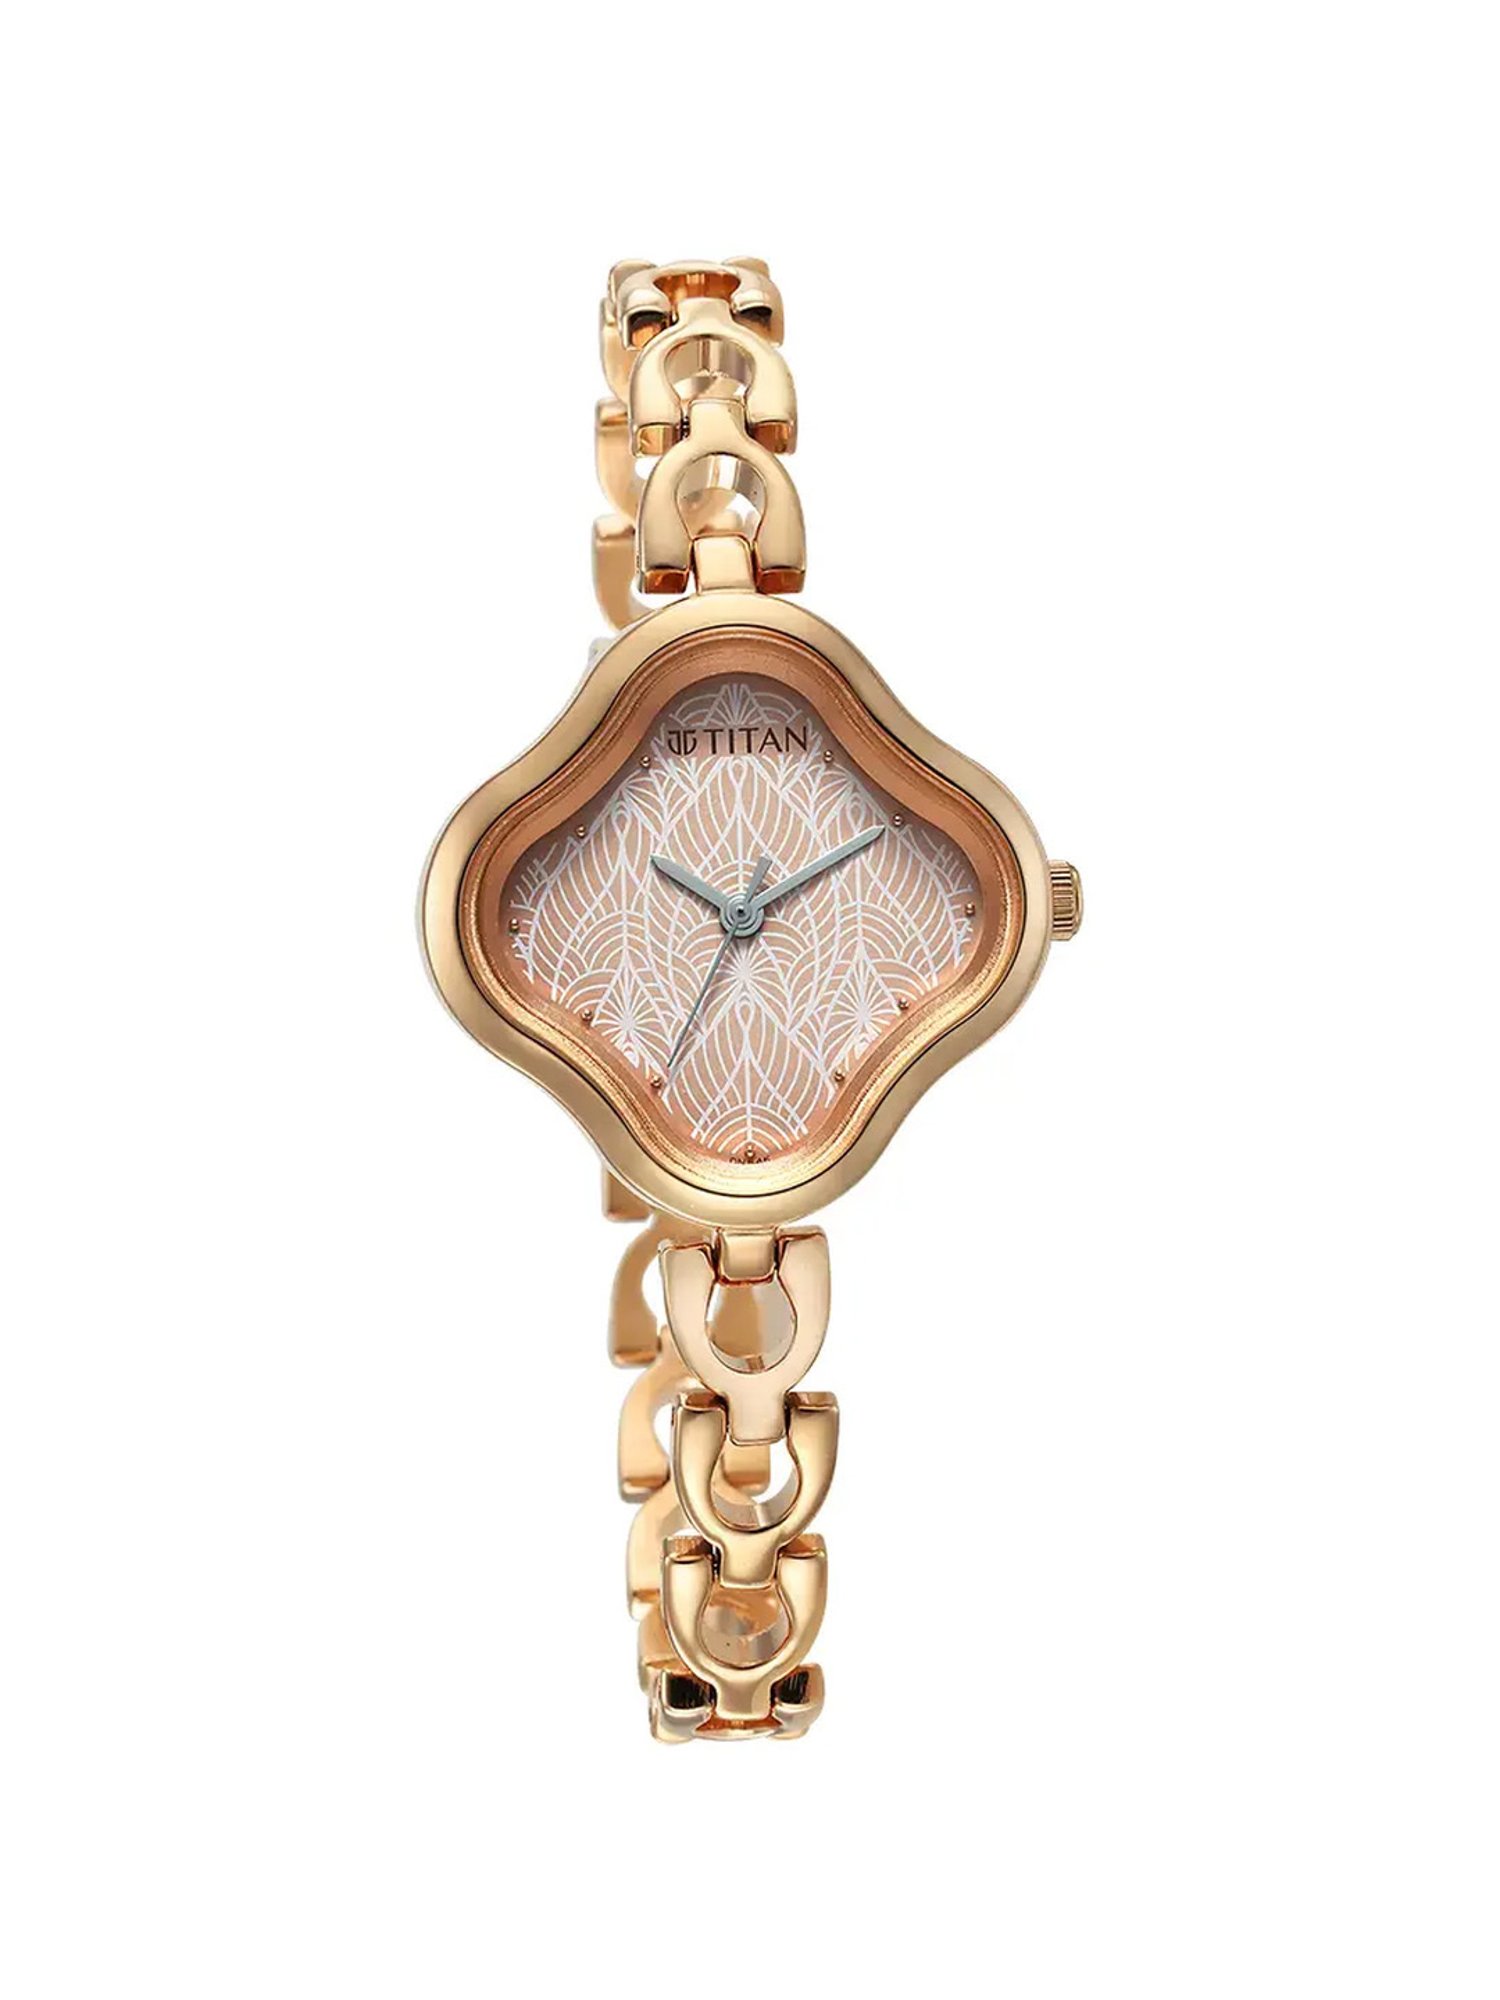 22K Gold Watch - Titan Raga Watch - Womens Gold Watch - 235-GW122 in 25.950  Grams